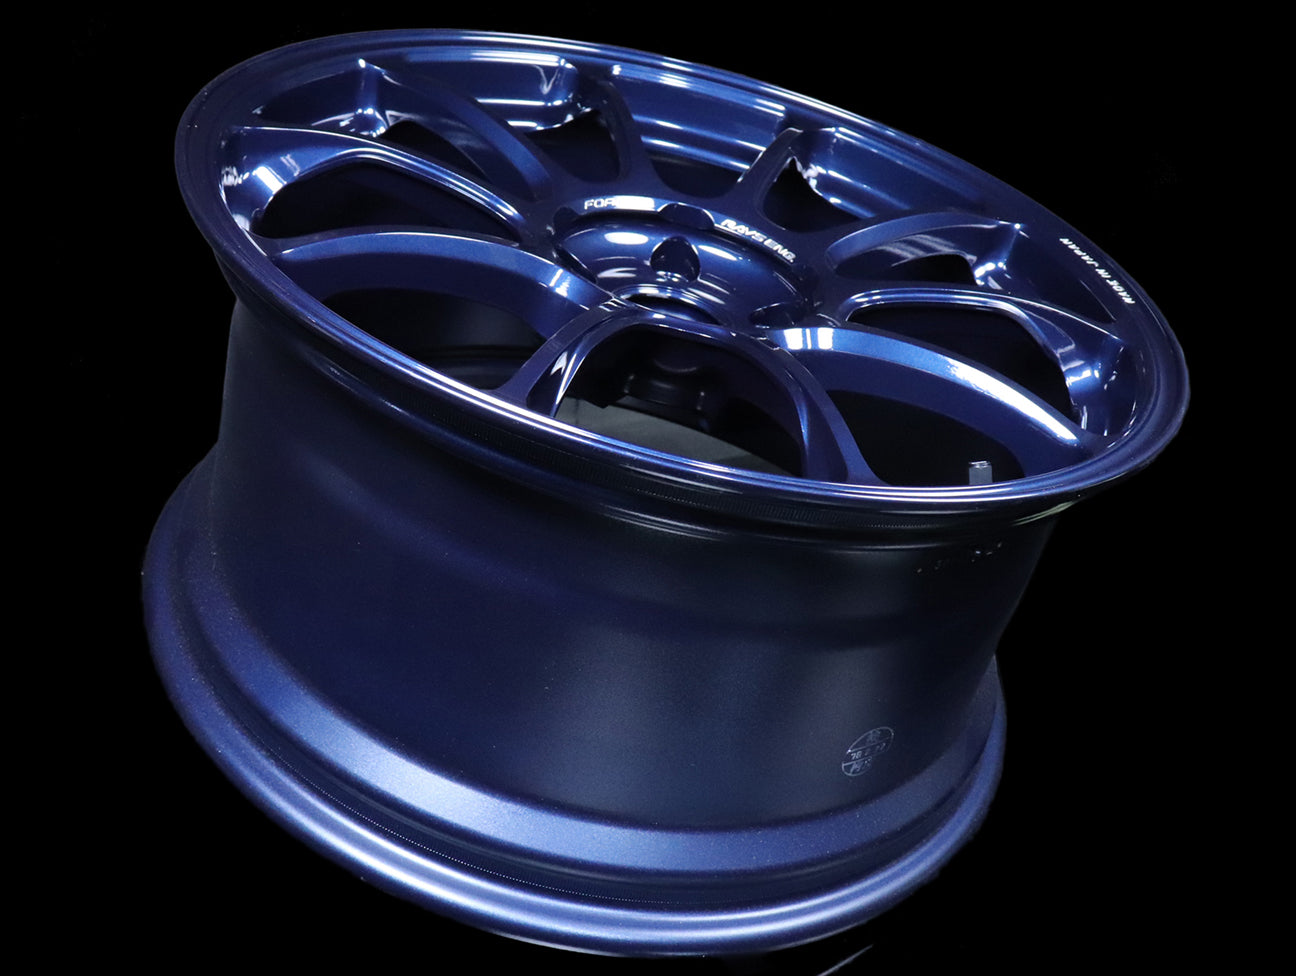 Volk Racing ZE40 Wheels - Mag Blue / 19x9.5 / 5x120 / +45